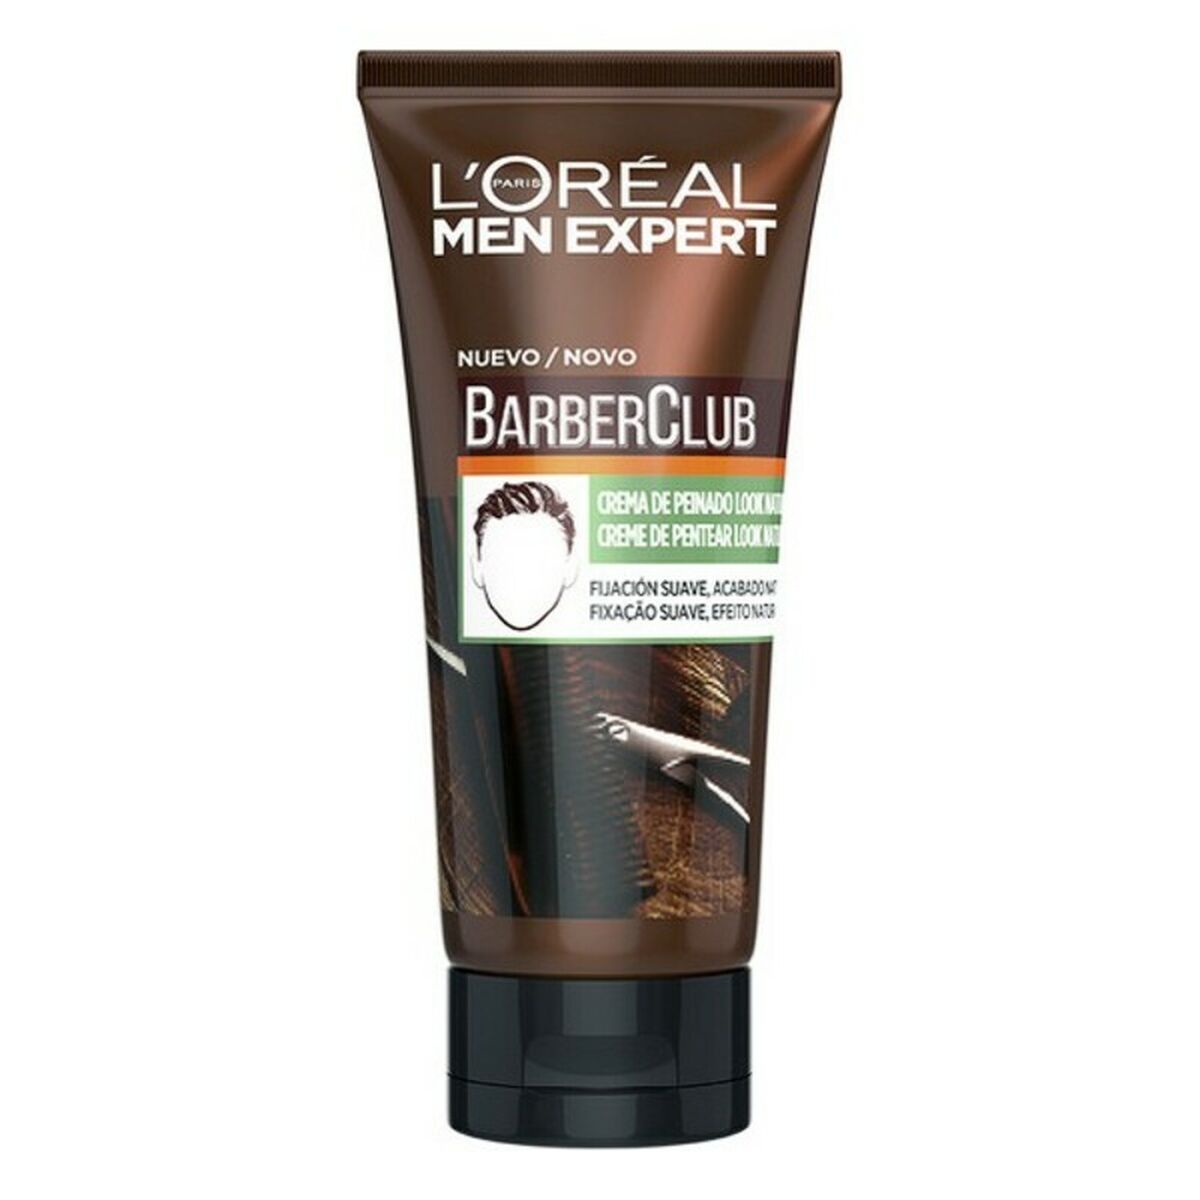 Barber club. L'Oreal men Expert Barber Club. Men Expert Barber Club. Лореаль гель для бритья щетины и бороды. Бальзам Barber Club Loreal.